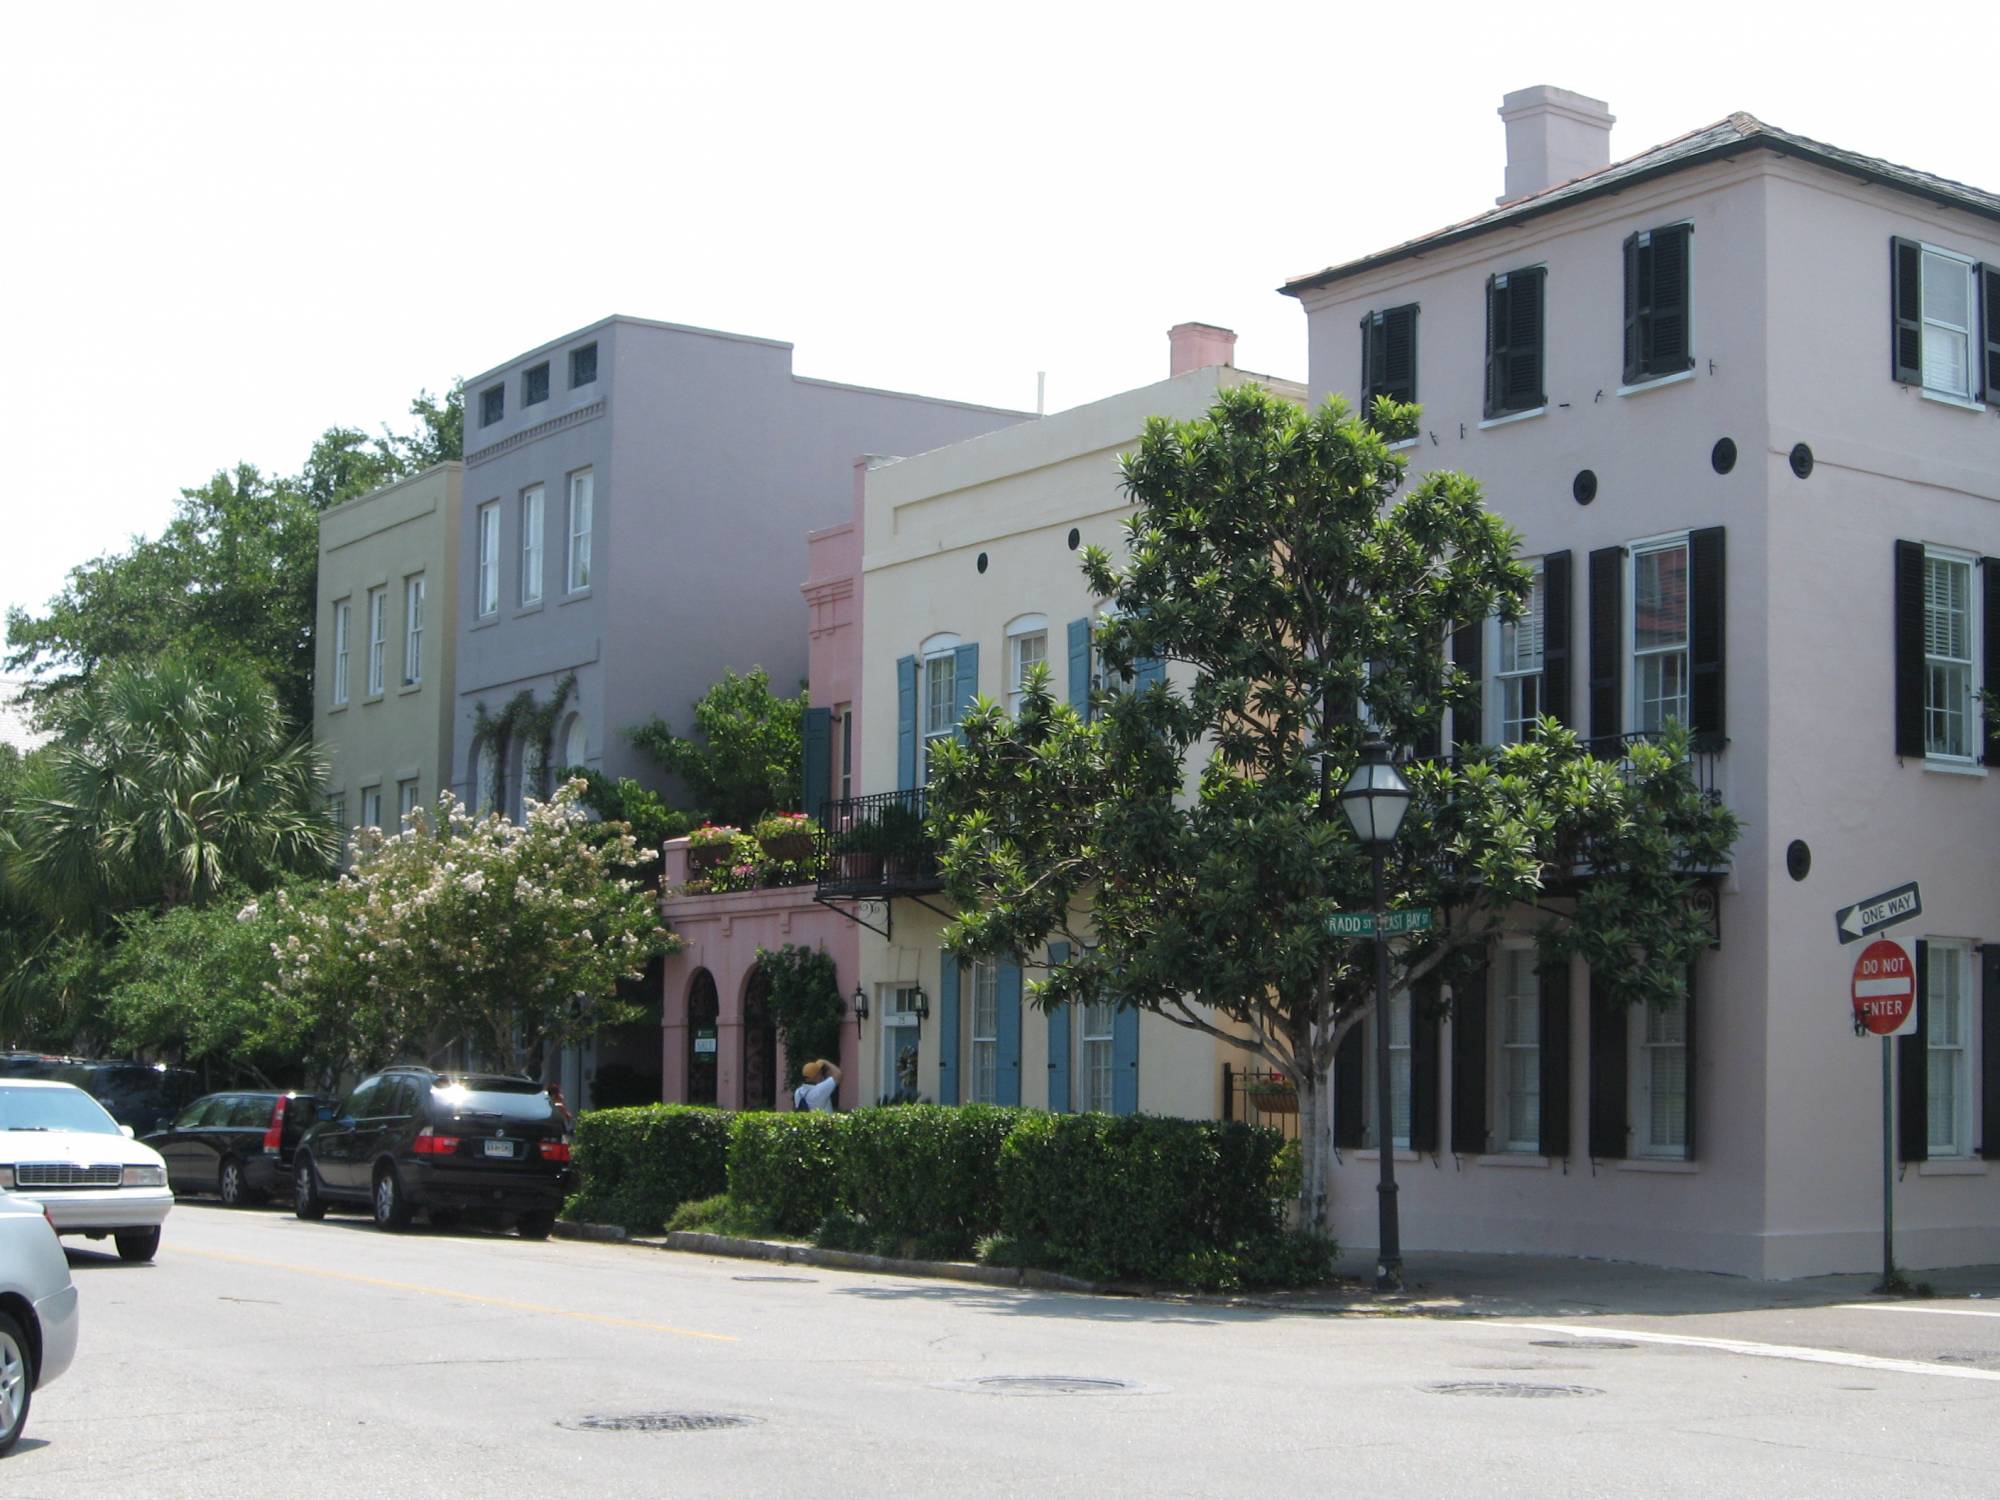 Charleston, SC - Rainbow Row on East Bay Street